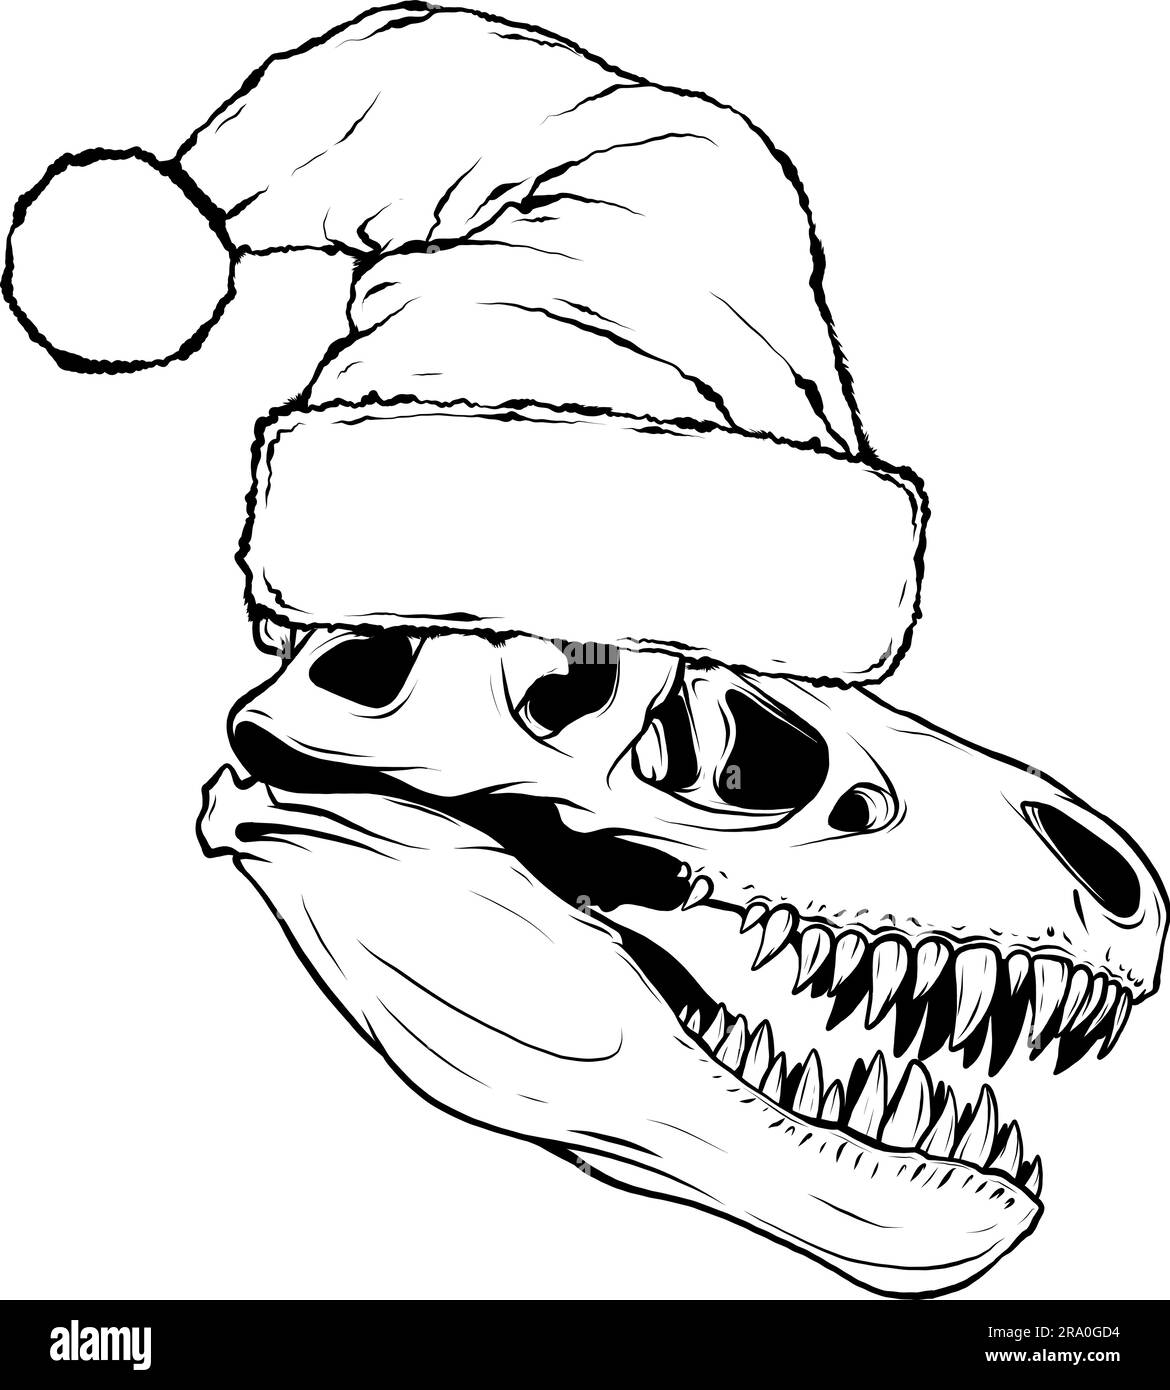 tyrannosaurus rex Dinosaur head in black and white outline vector illustration Stock Vector